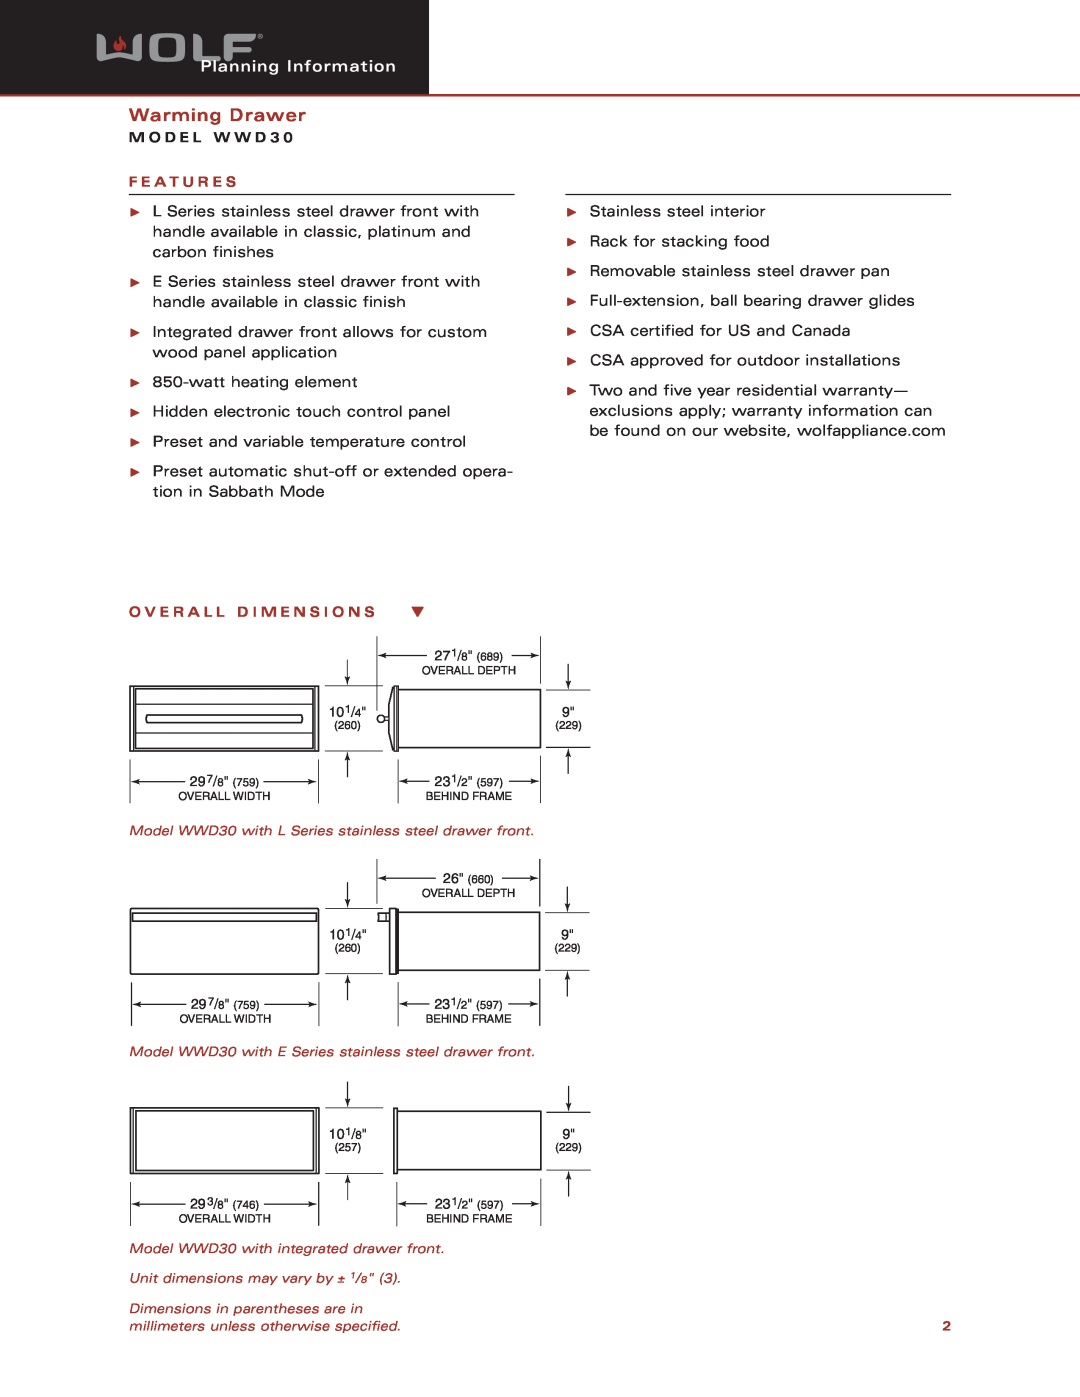 Wolf Appliance Company WWD30 dimensions Warming Drawer, Planning Information, M O D E L W W D, F E A T U R E S 